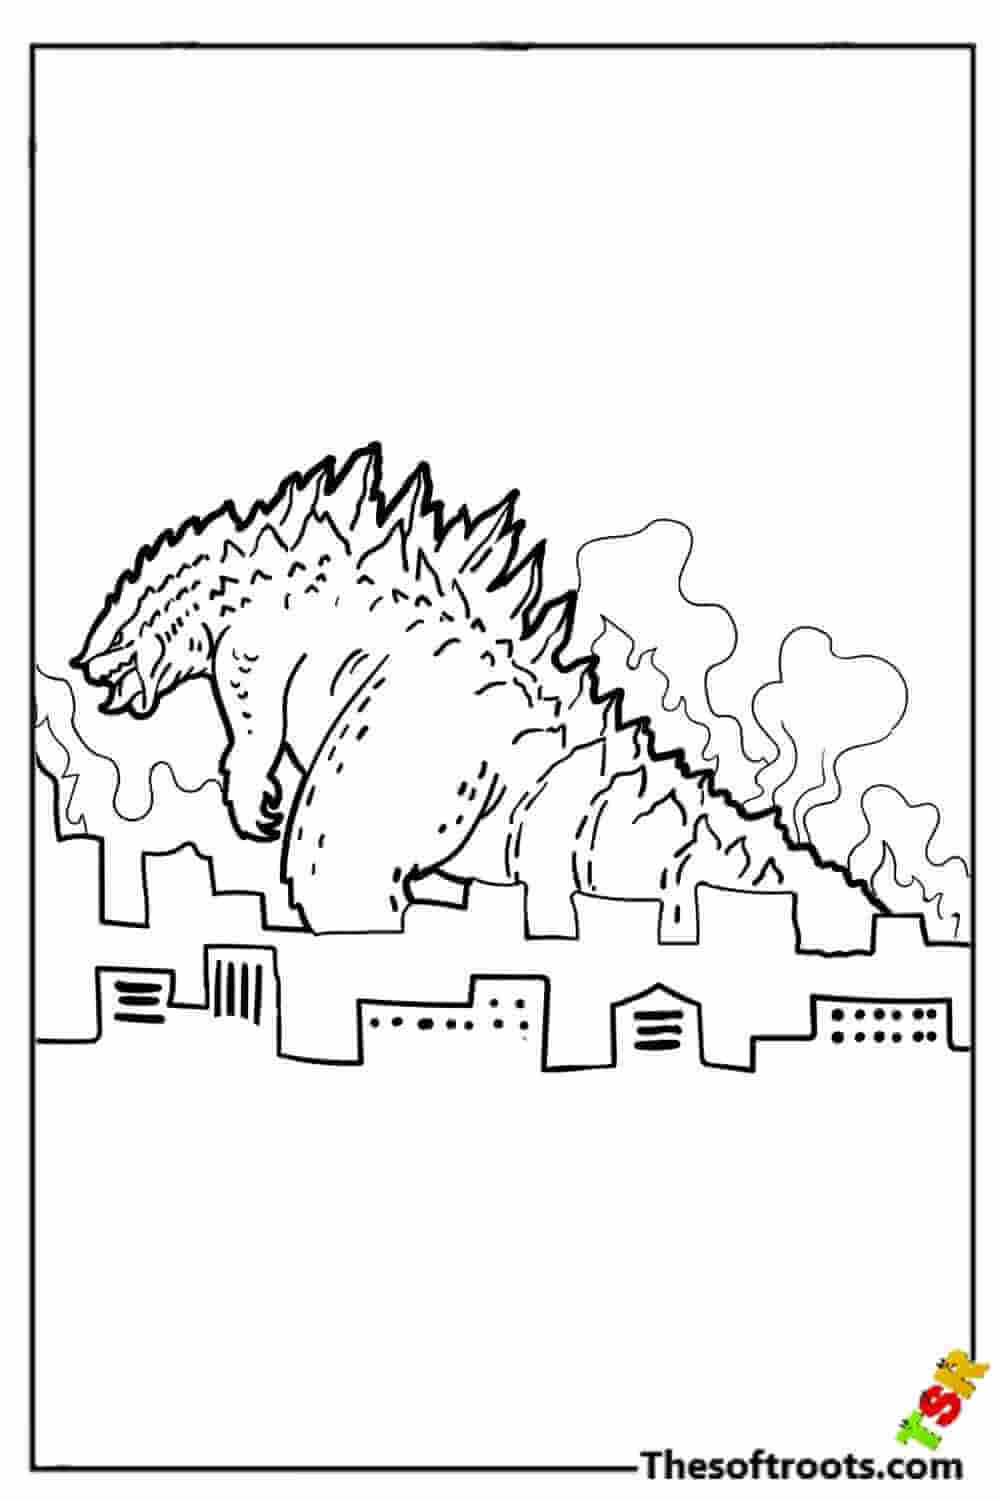 Huge Godzilla coloring pages